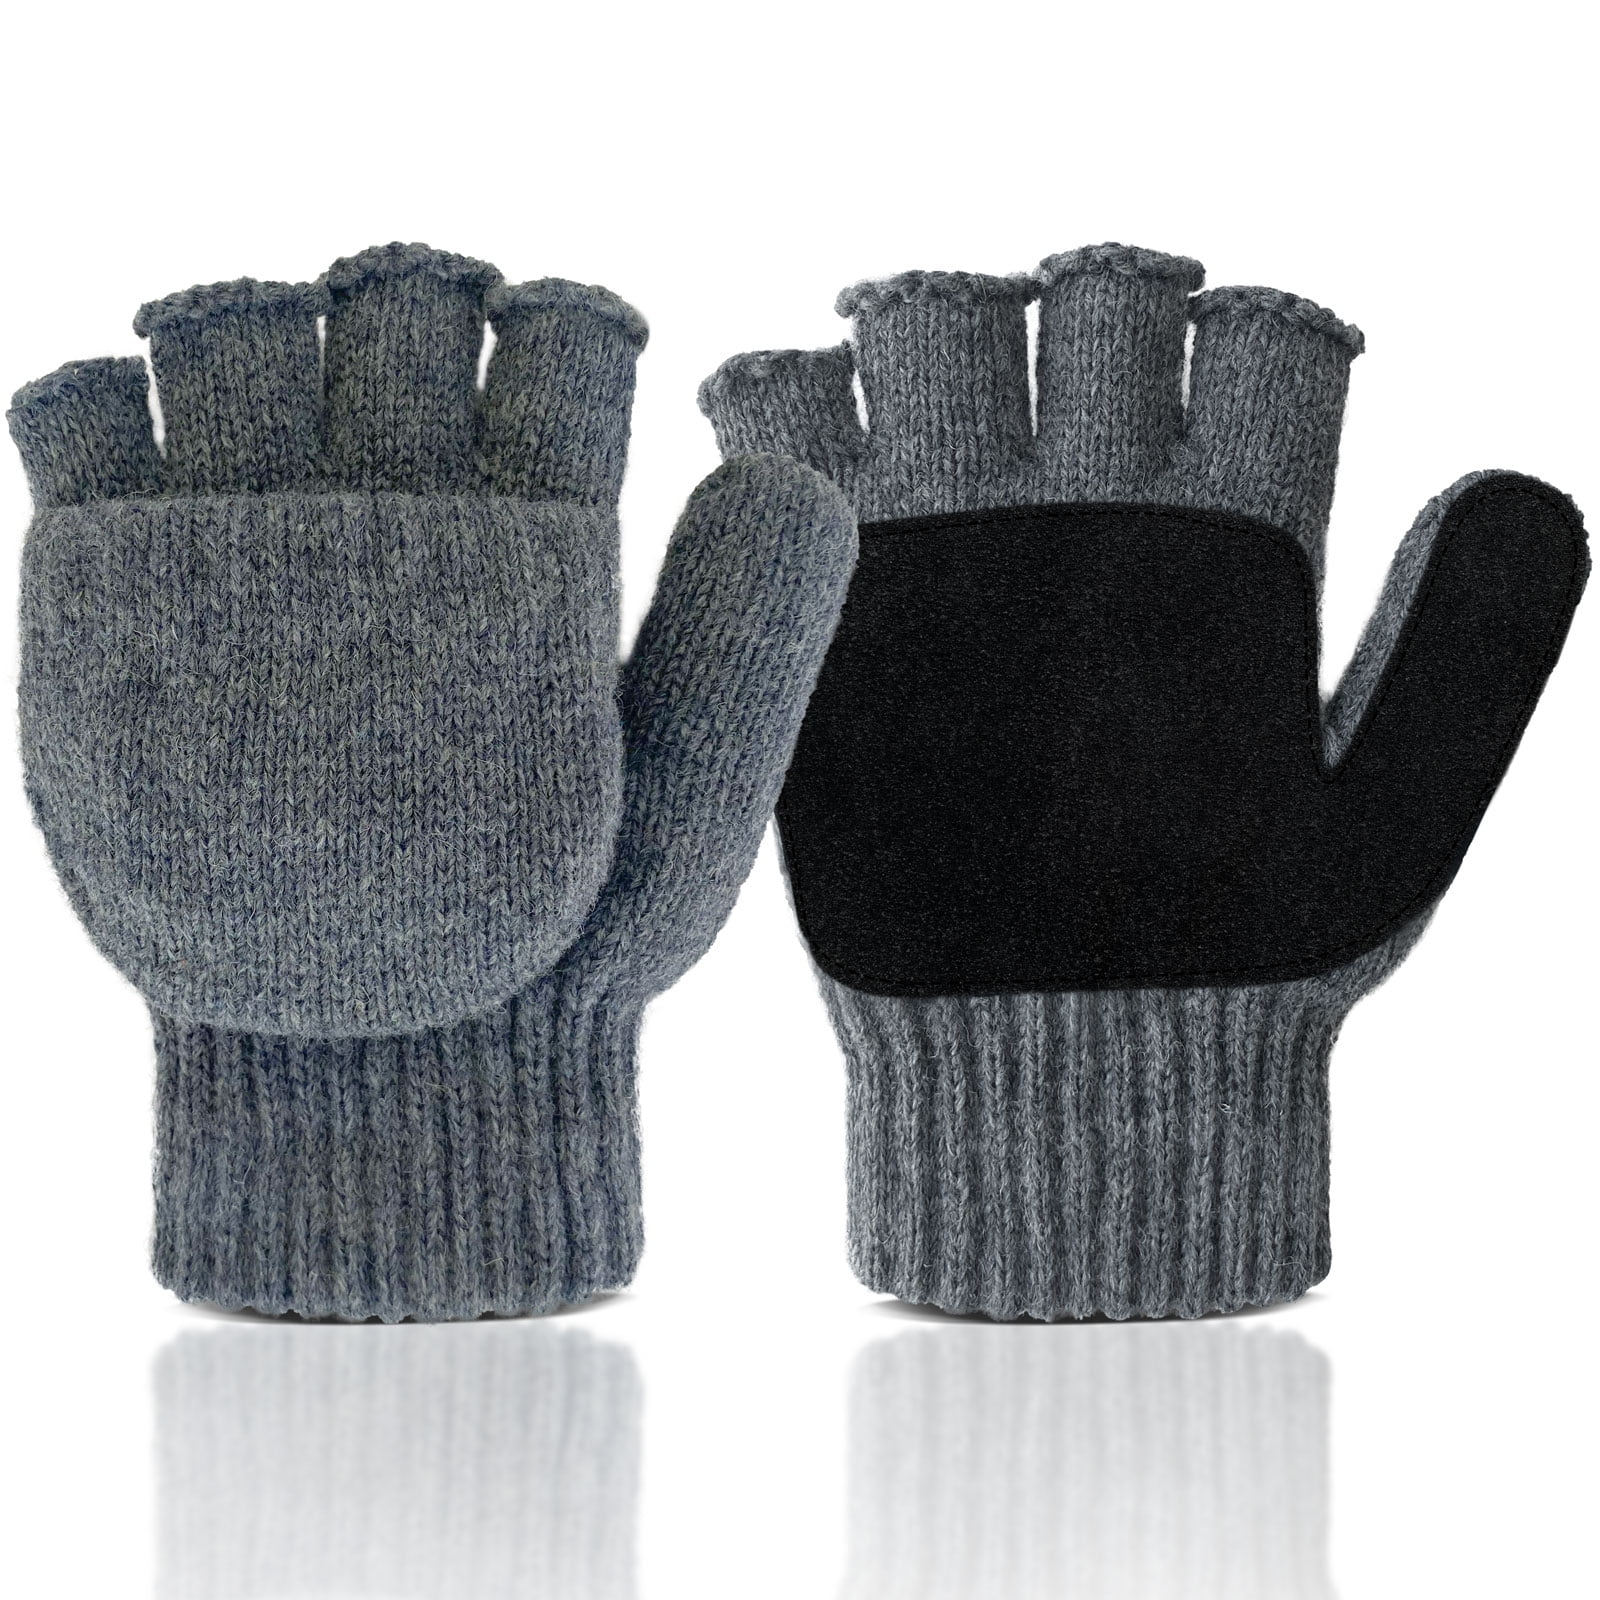 EvridWear Winter Convertible Fingerless Gloves, Wool Mittens Warm, with ...